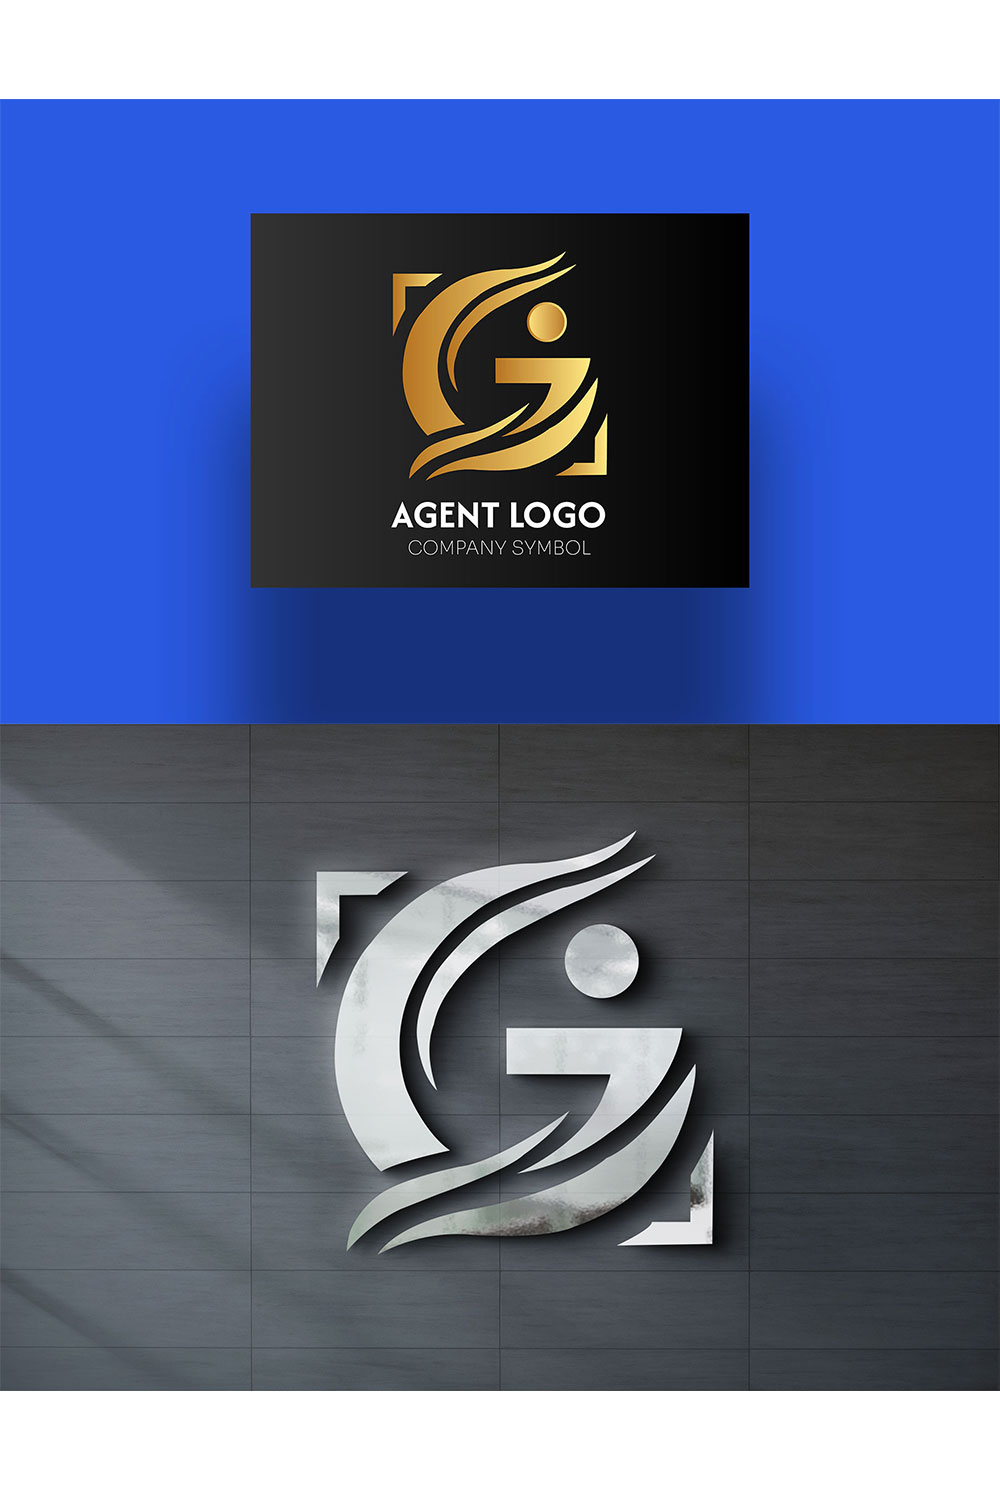 G Letter Best Aware Company Logo pinterest preview image.